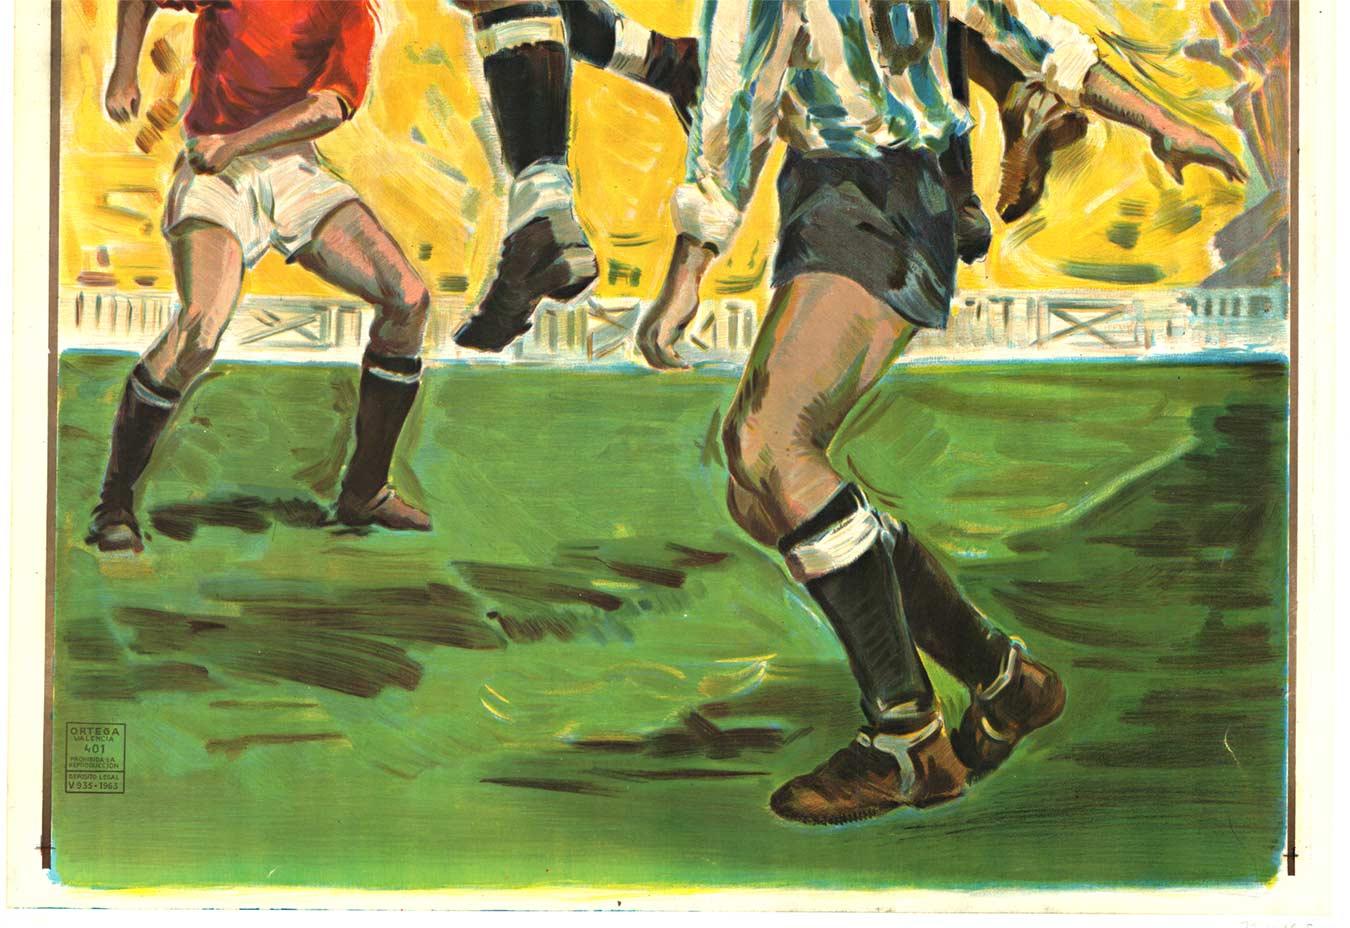 Original 'Soccer' vintage lithograph posters a.k.a. 